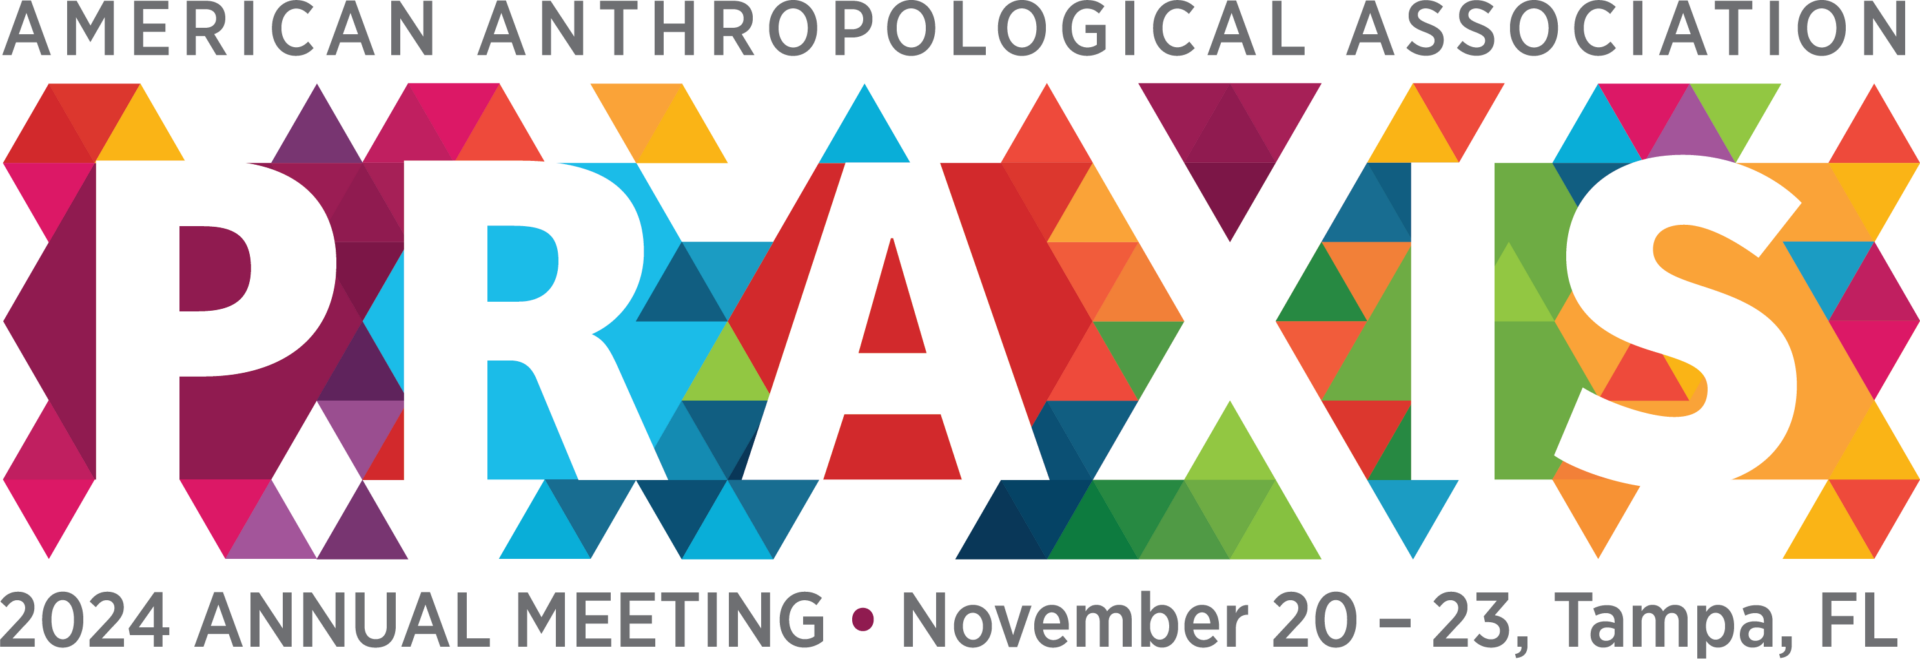 Praxis American Anthropological Association 2024 Annual Meeting, November 20-24, Tampa, FL